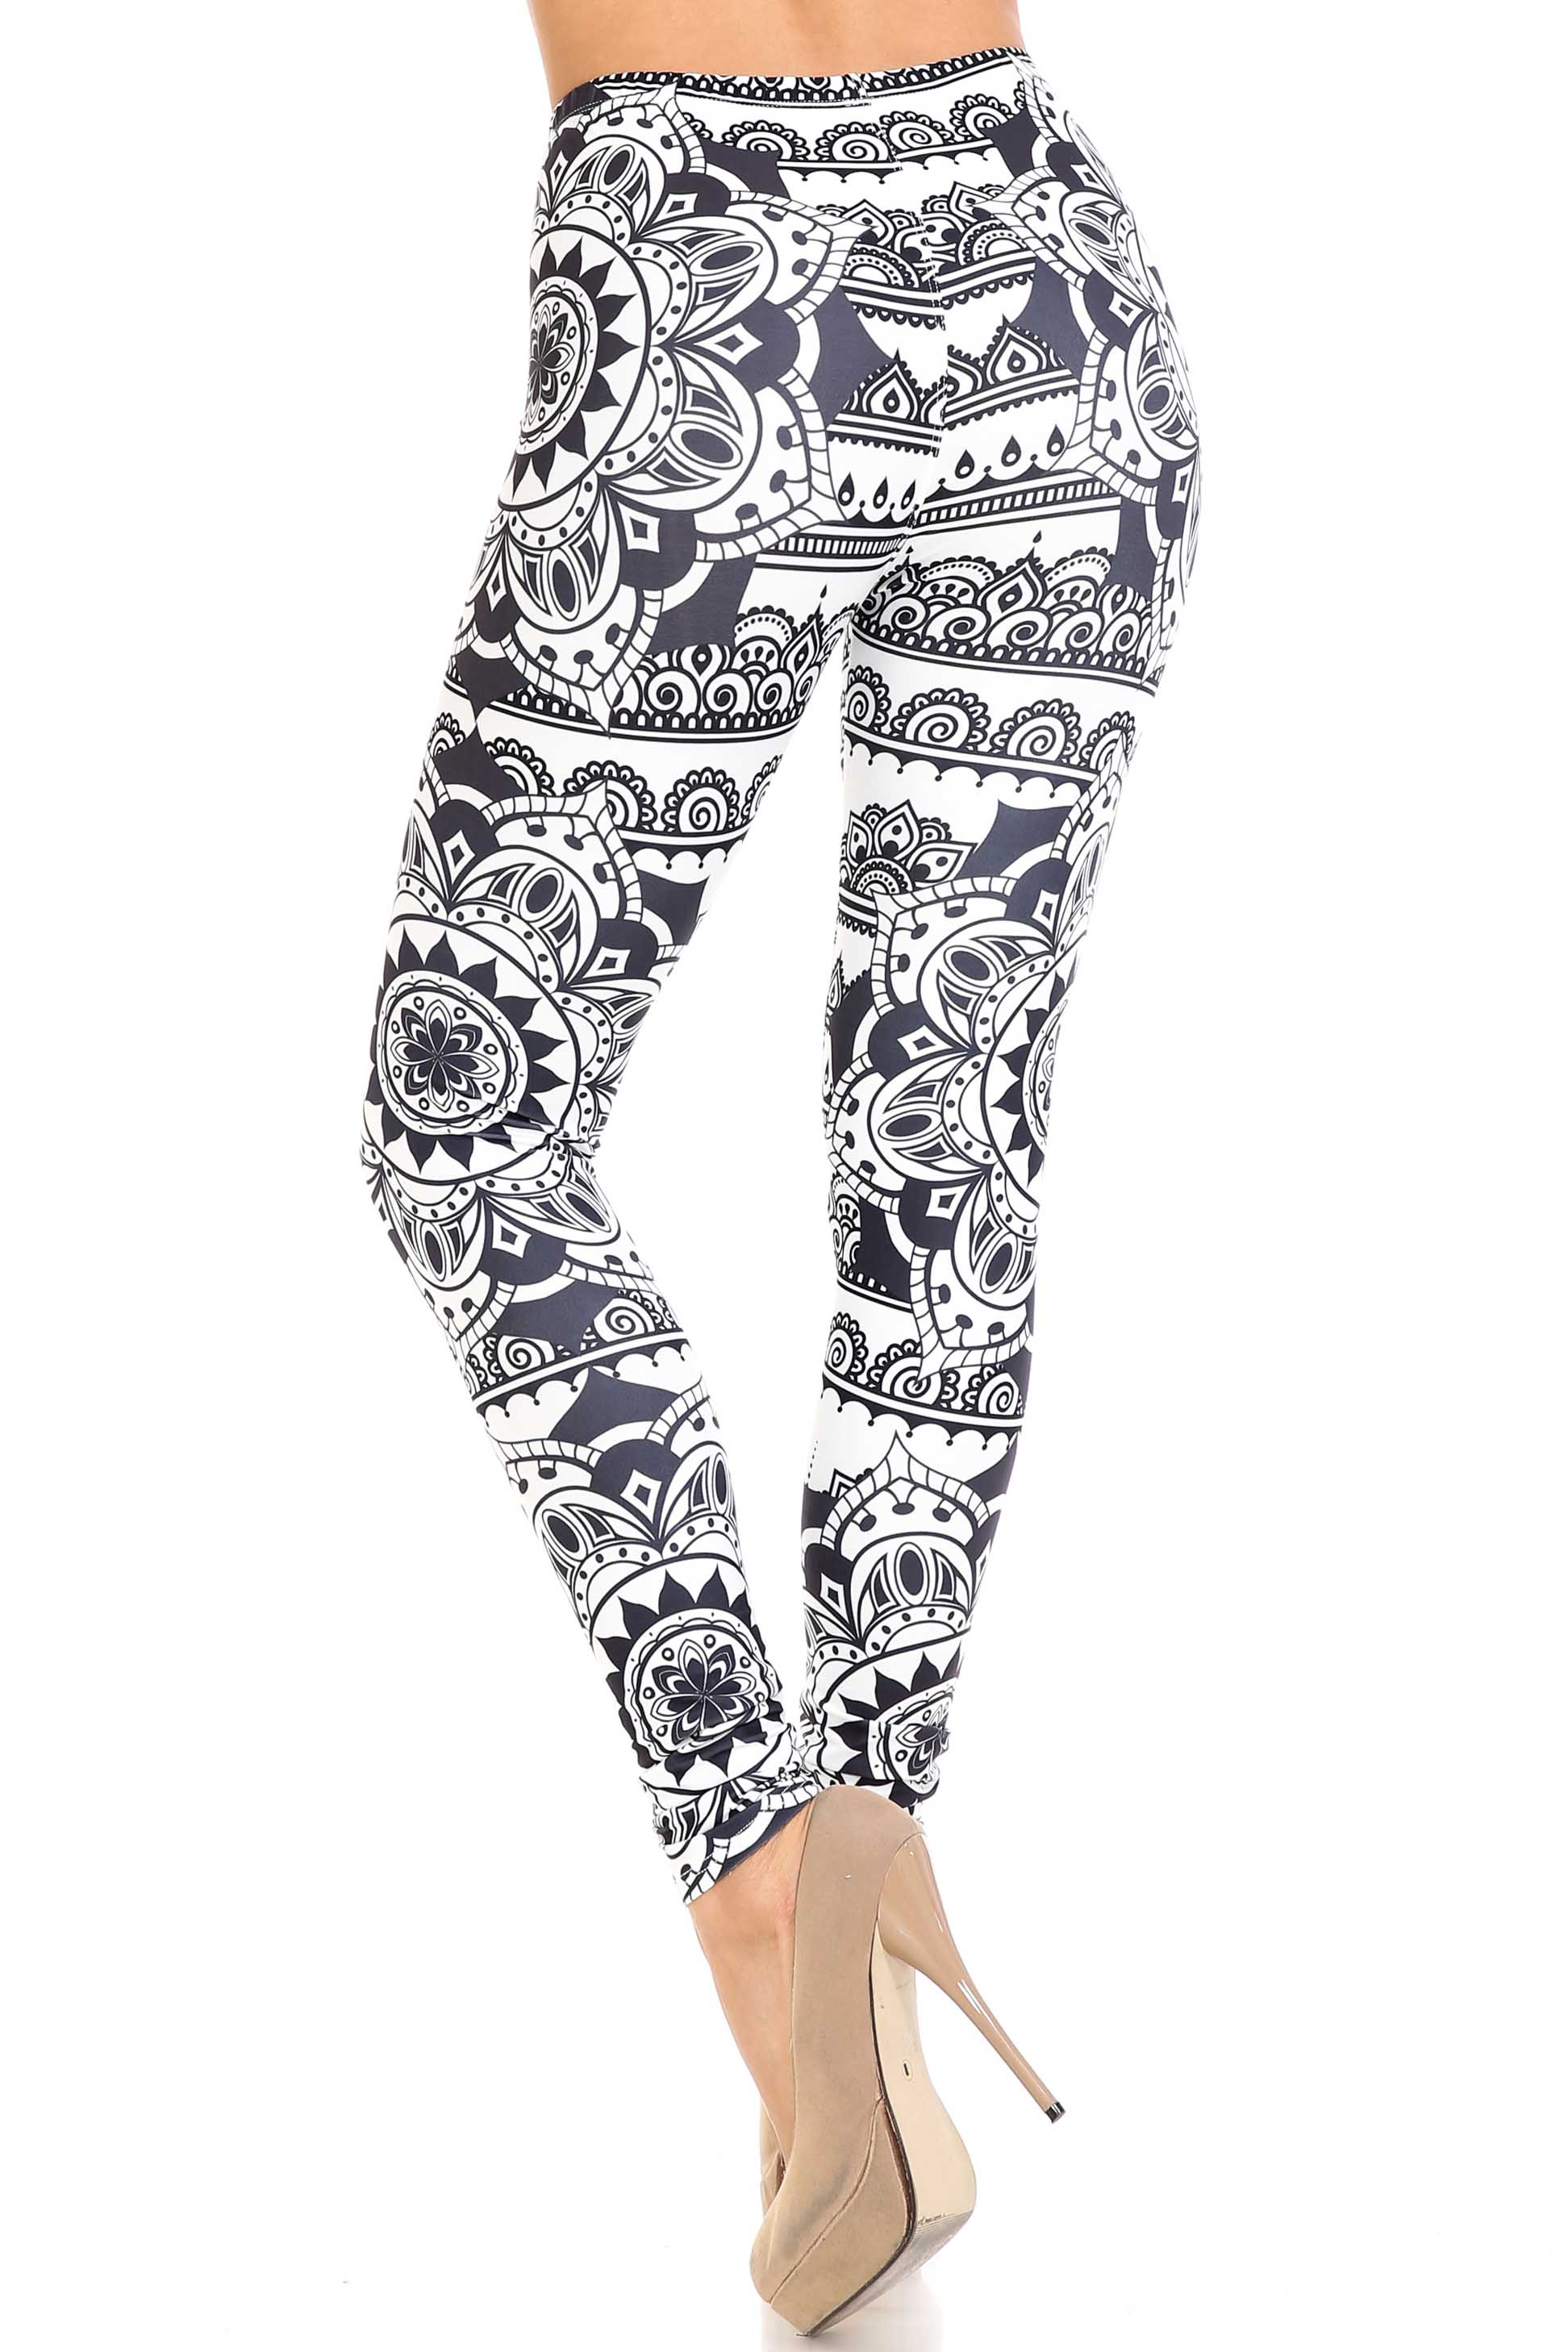 Wholesale Creamy Soft Monochrome Mandala Leggings - By USA Fashion™